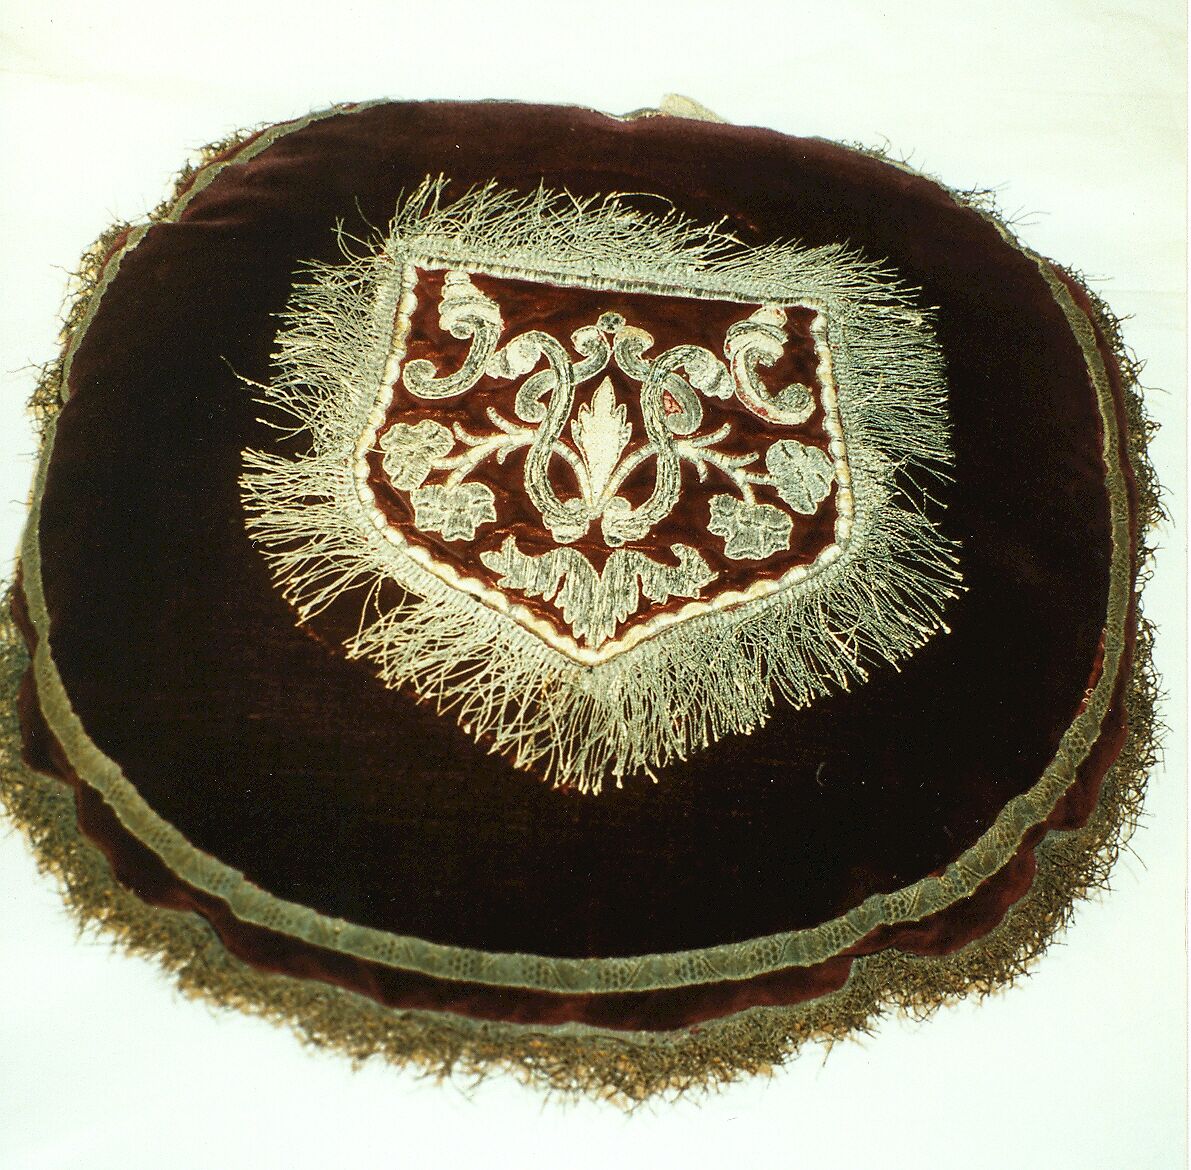 Pocket (sewn onto center of round cushion), silk; metal;, Italian or Spanish 